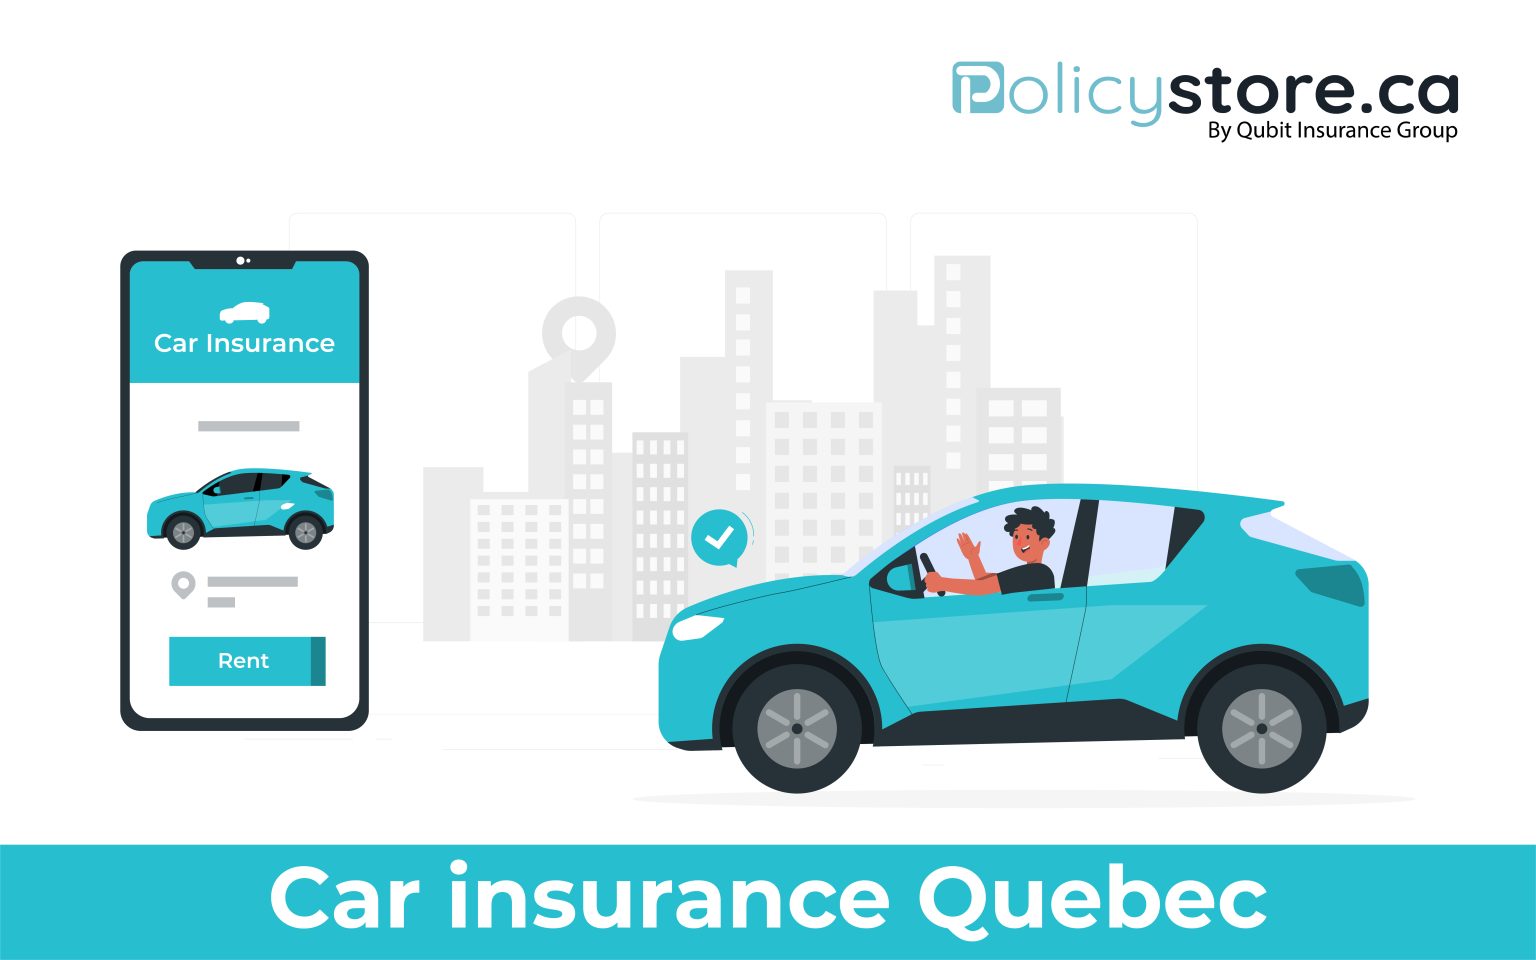 Car insurance in Quebec